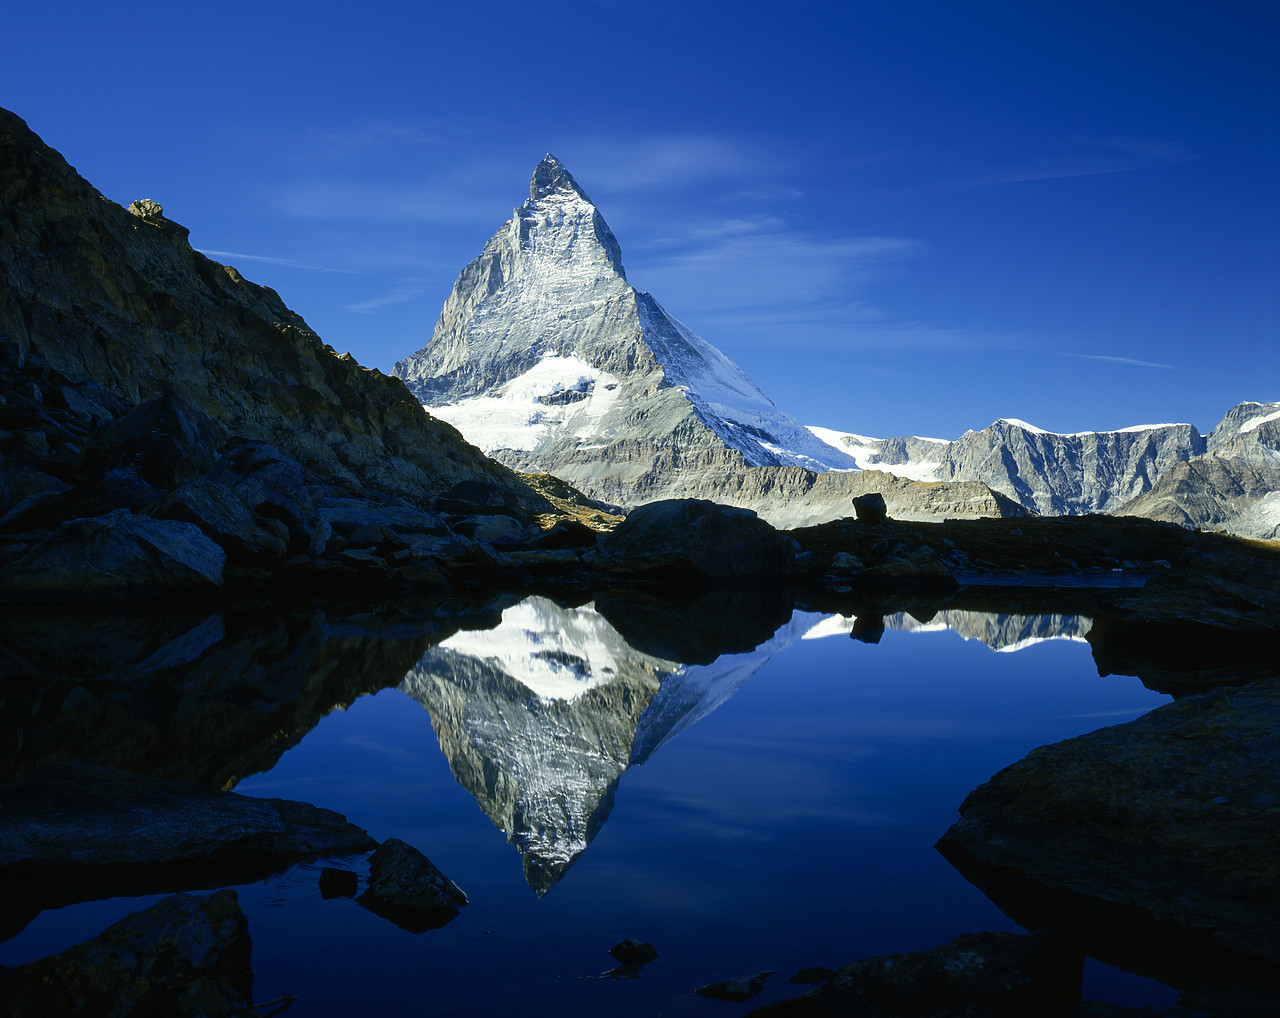 #85462-1 - Matterhorn Reflecting in Riffelsee, Zermatt, Switzerland.